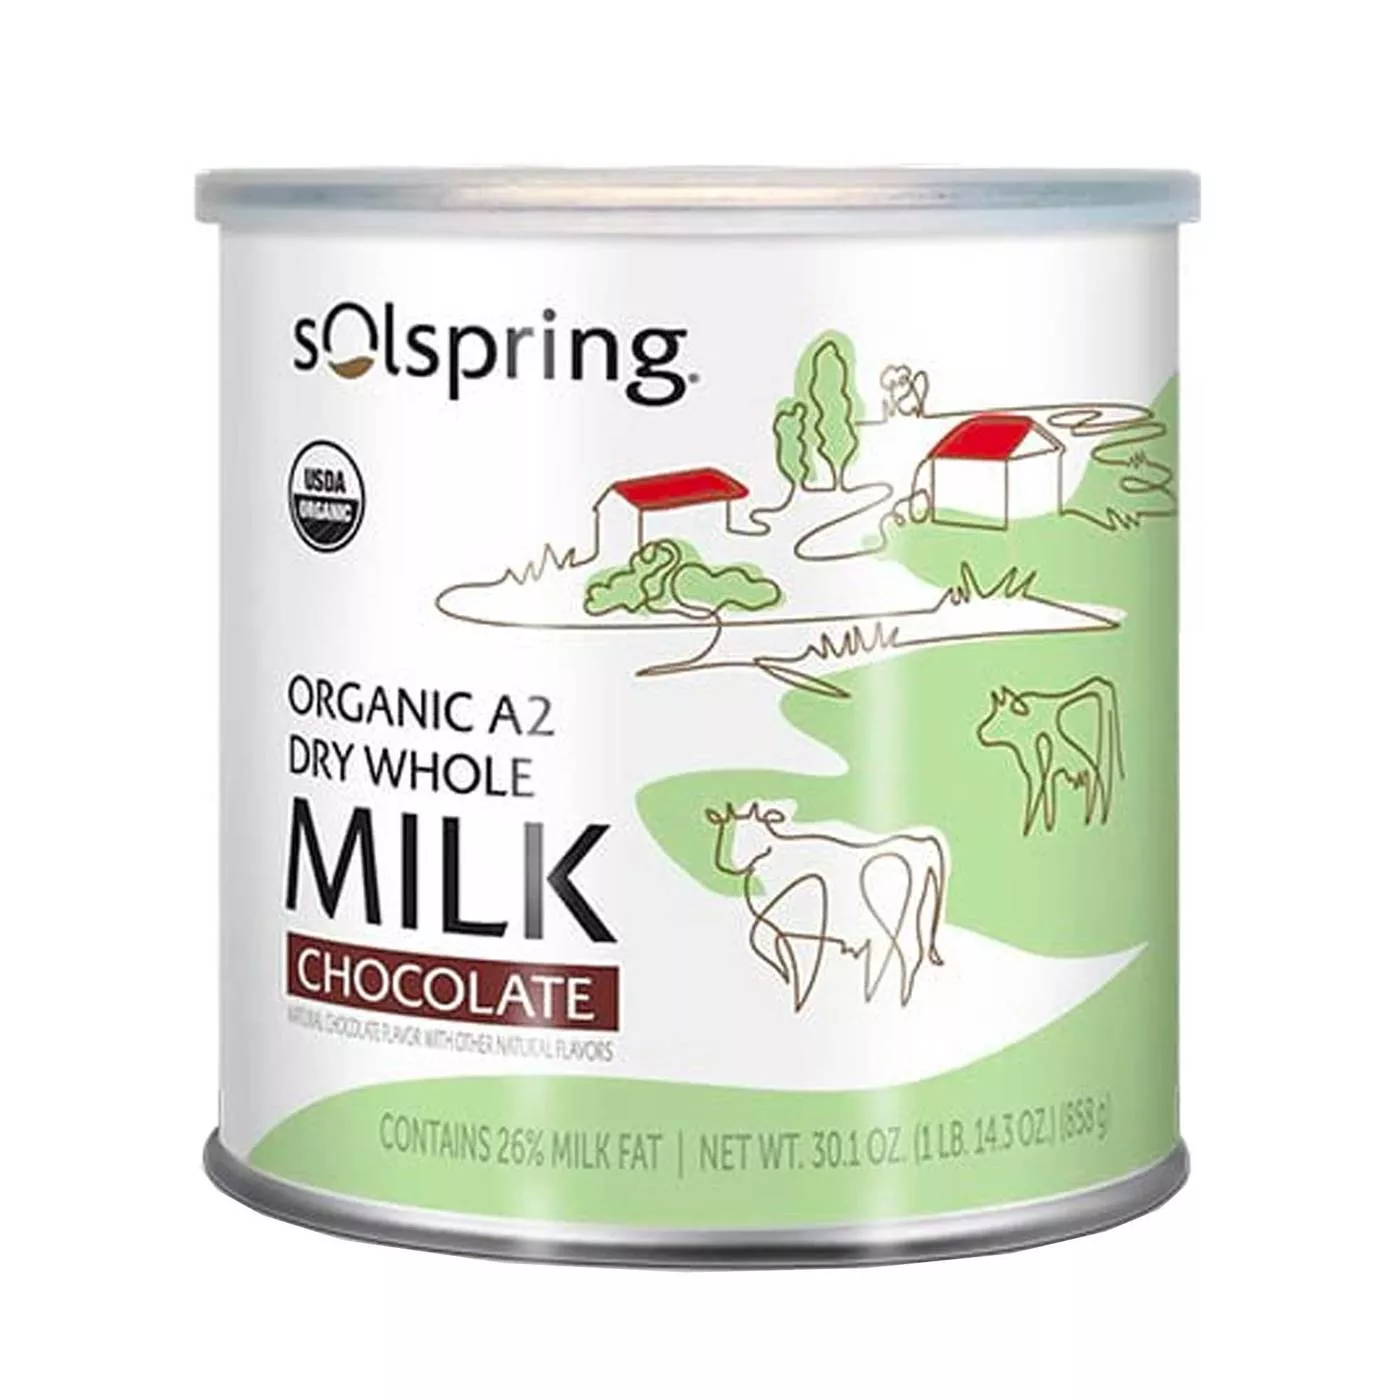 Solspring Organic A2 Dry Whole Milk, Chocolate - 17.4 oz (493 g 